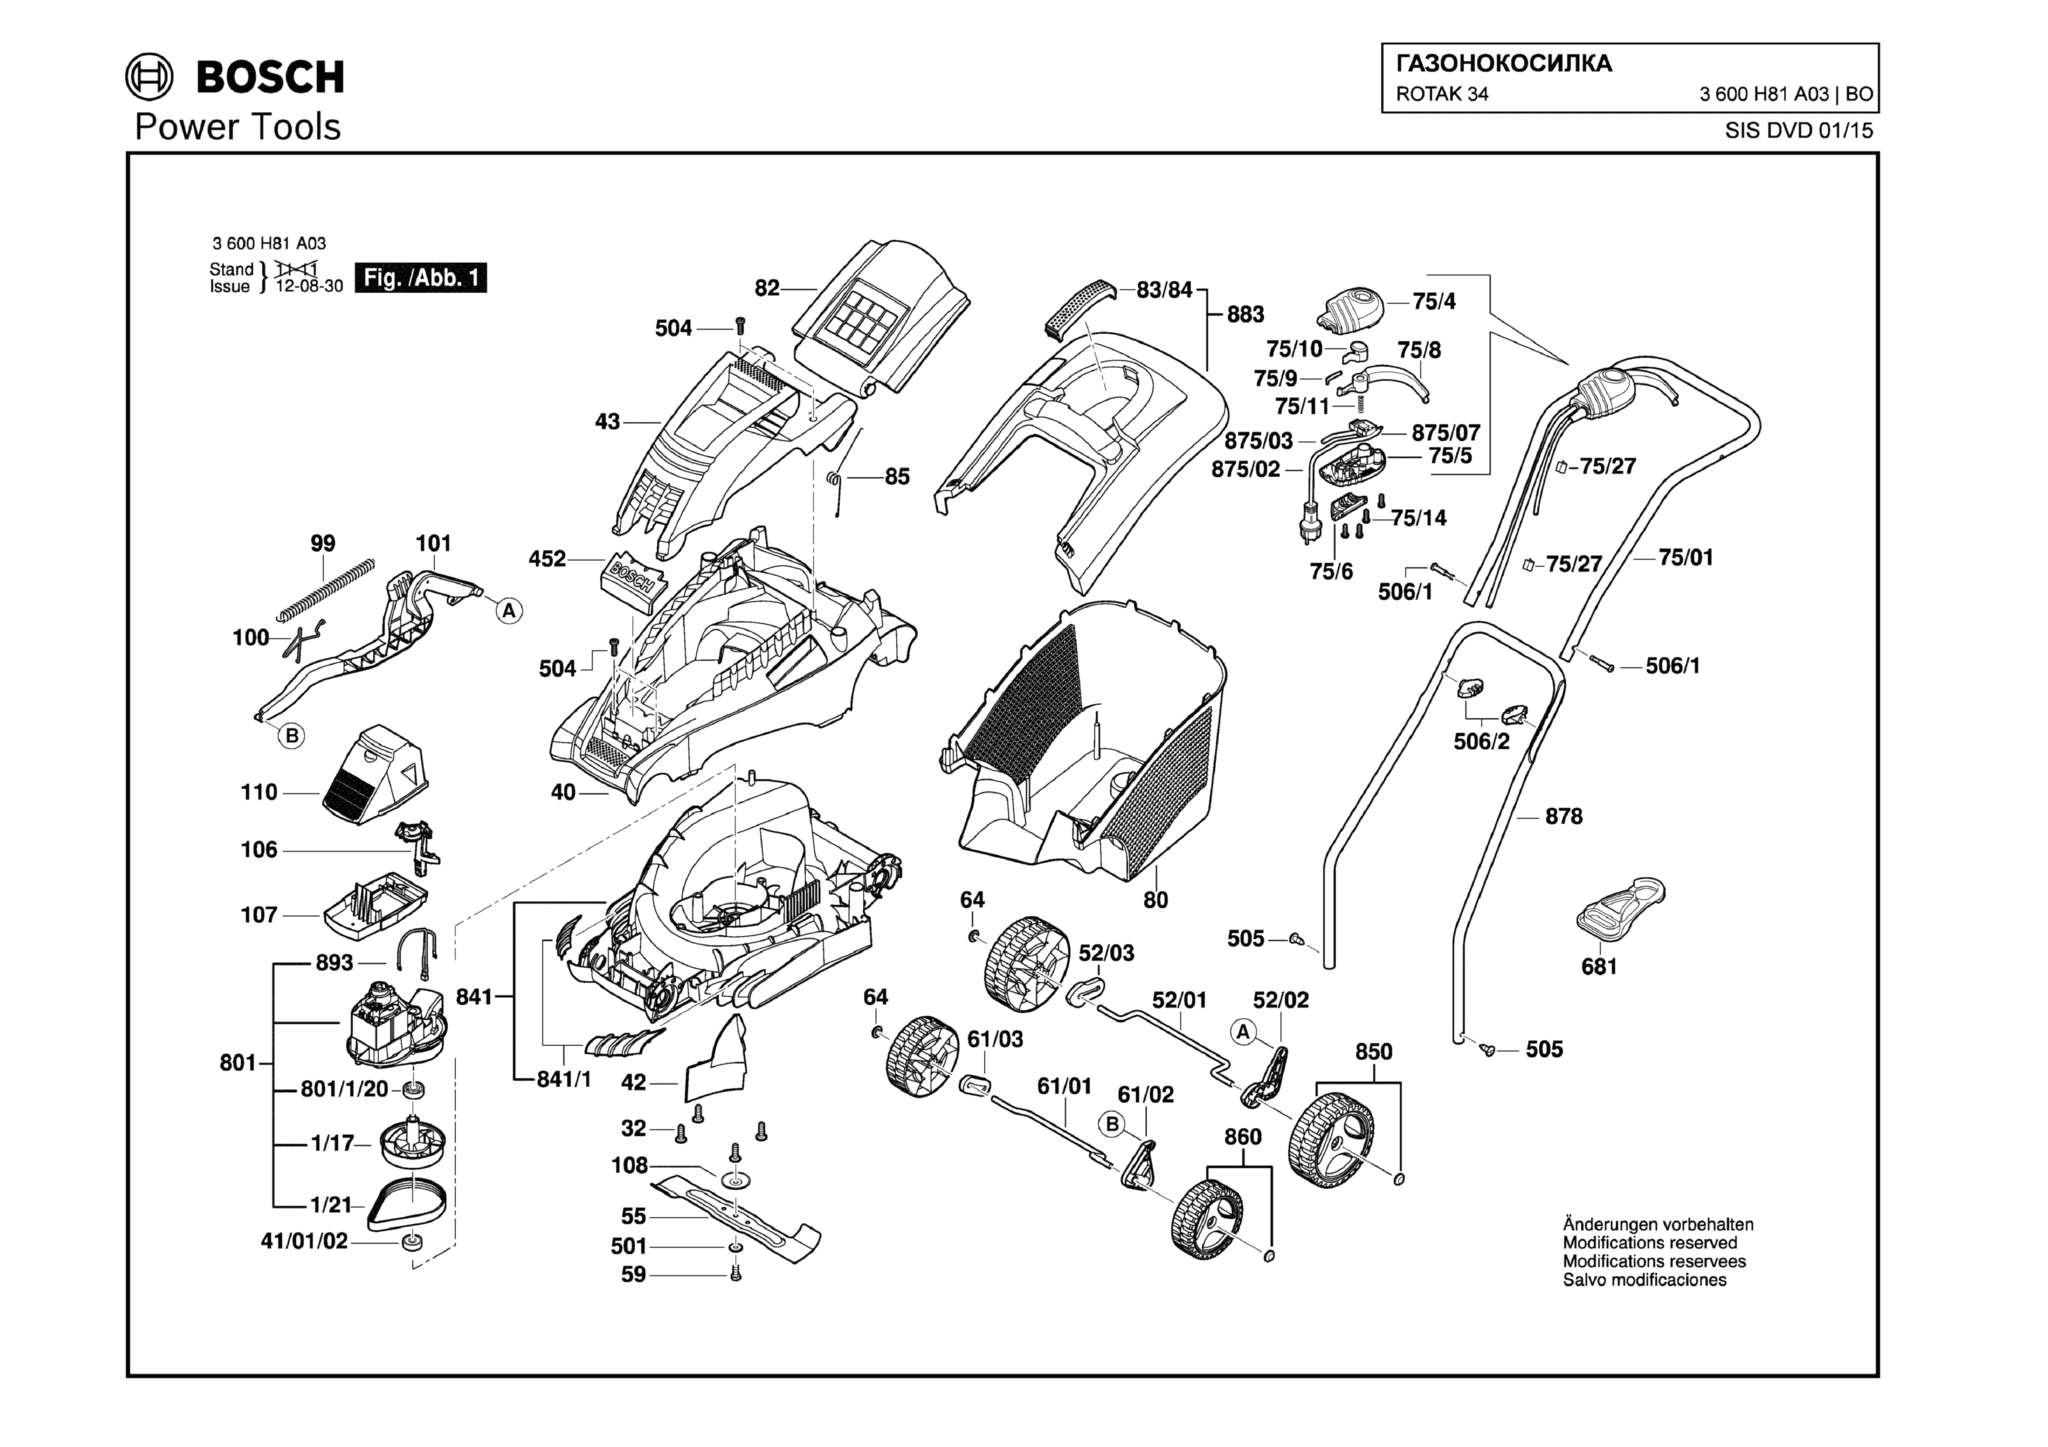 Запчасти, схема и деталировка Bosch ROTAK 34 (ТИП 3600H81A03)